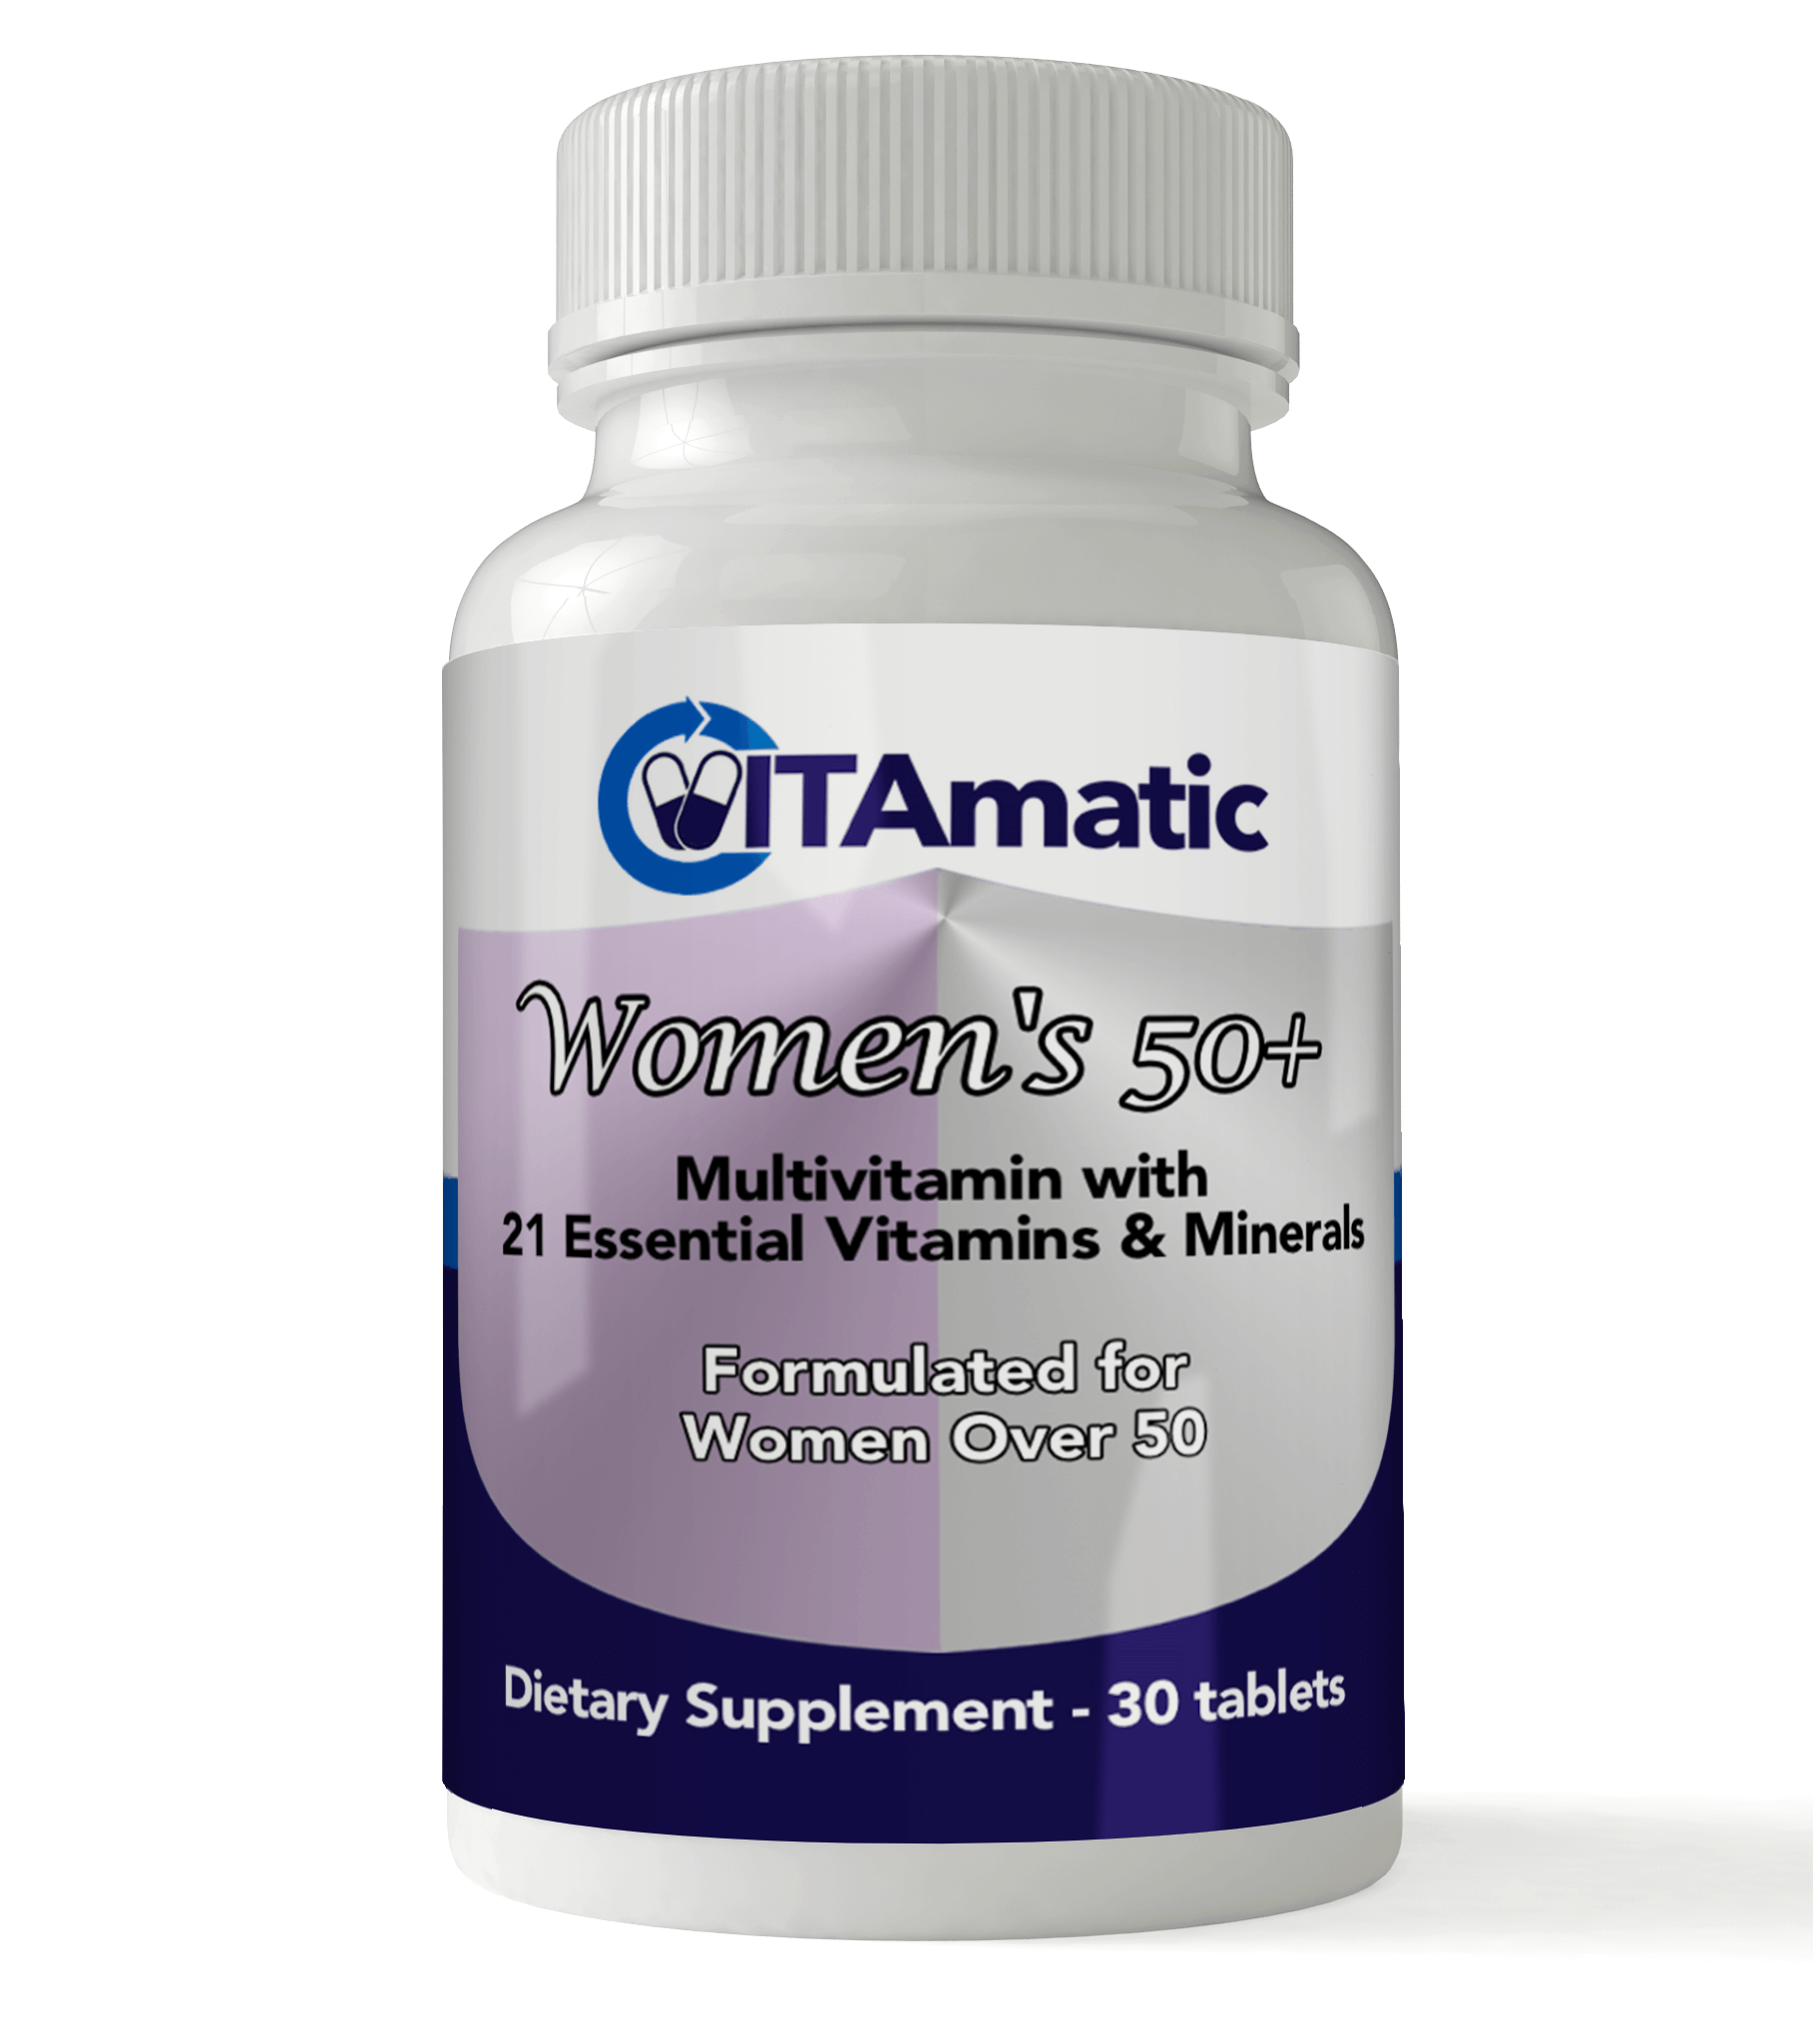 Vitamatic Womens 50+ Multivitamin